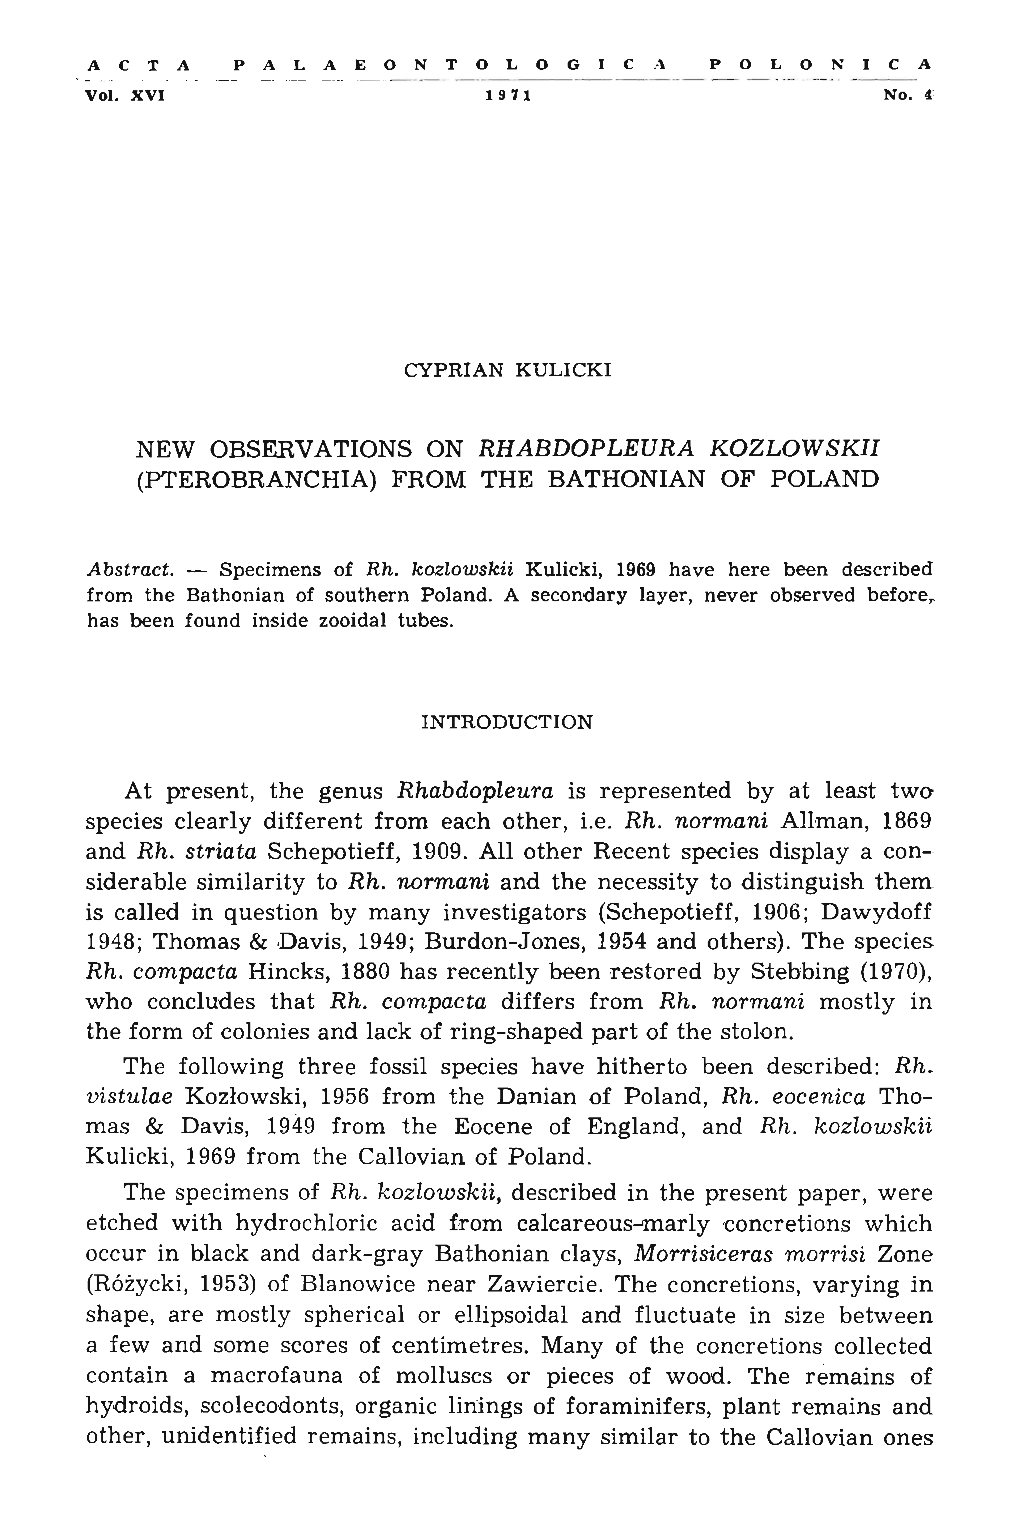 New Observations on Rhabdopleura Kozlowskii (Pterobranchia) from the Bathonian of Poland